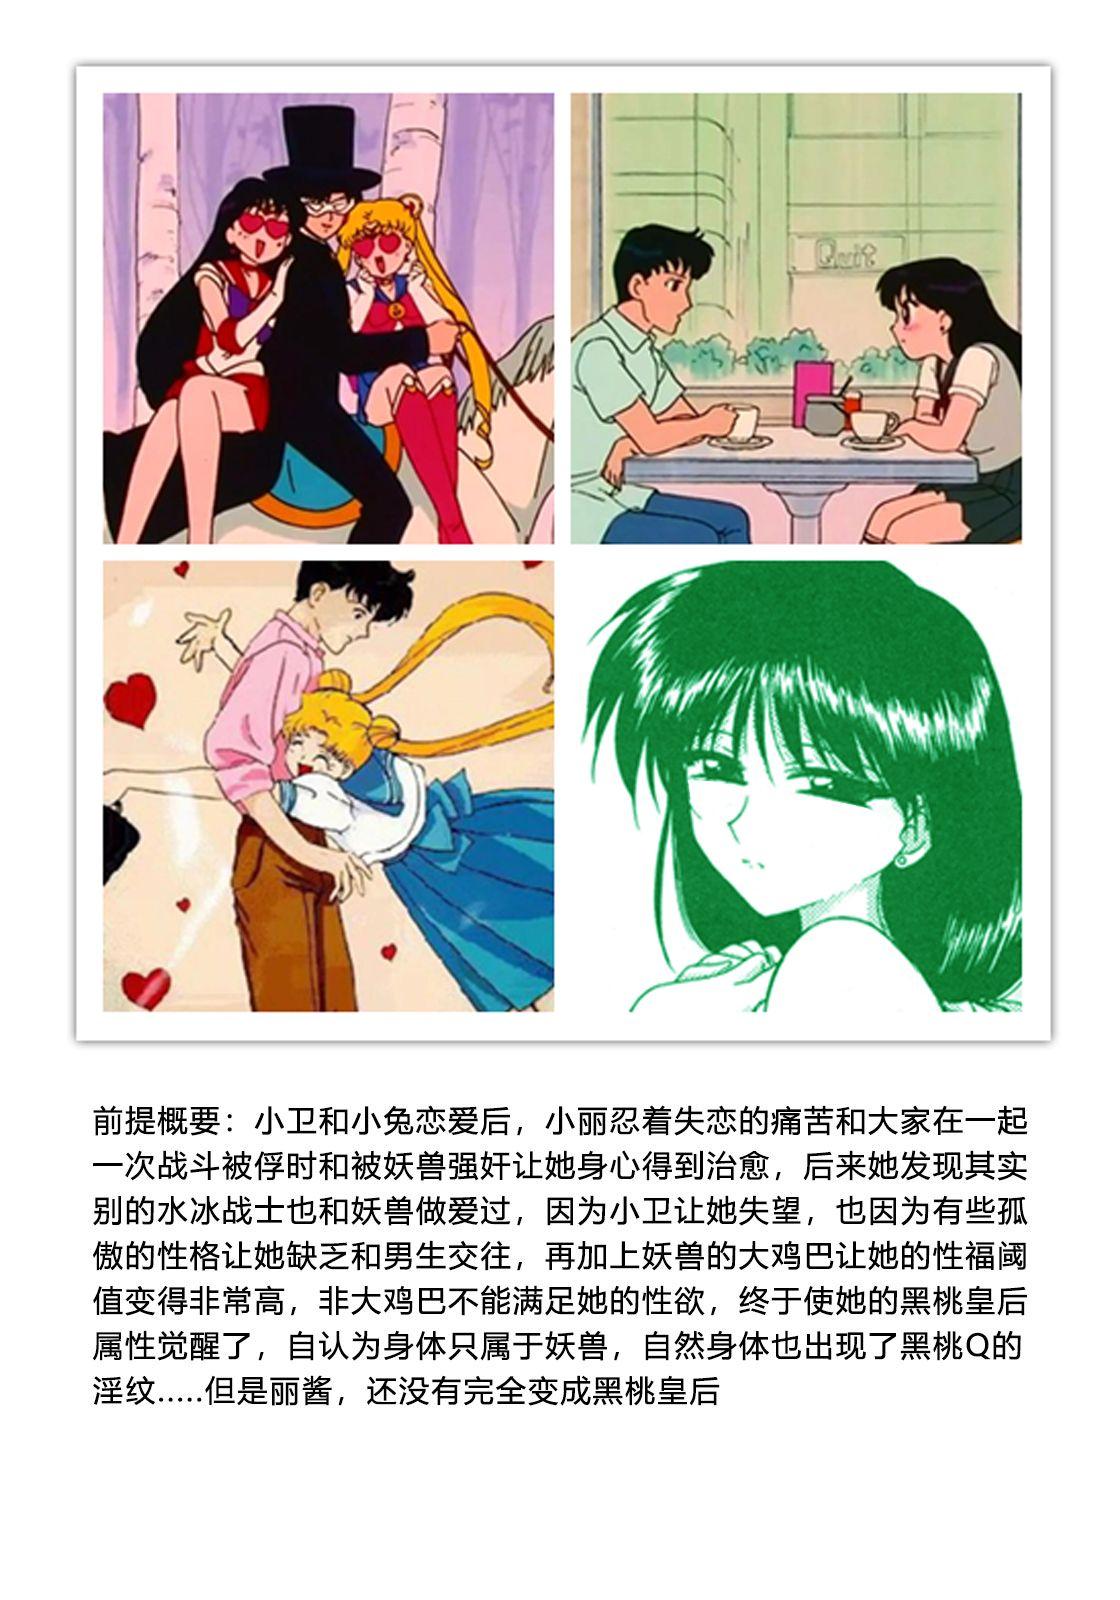 Coeds QUEEN OF SPADES - 黑桃皇后 - Sailor moon Ruiva - Page 12